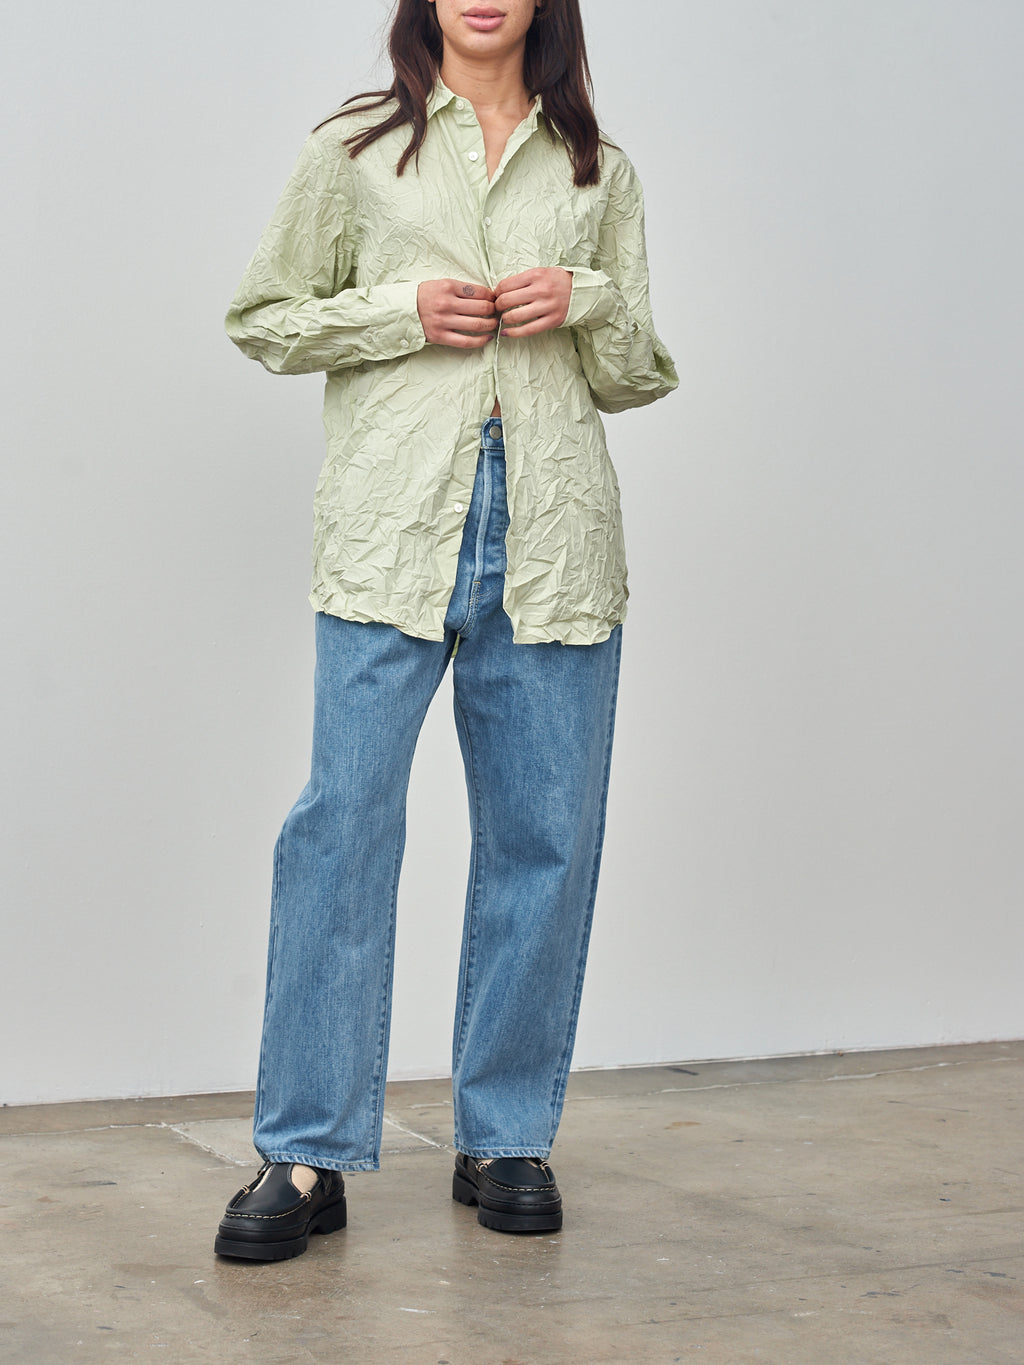 Namu Shop - Auralee Wrinkled Washed Finx Twill Shirt - Light Green